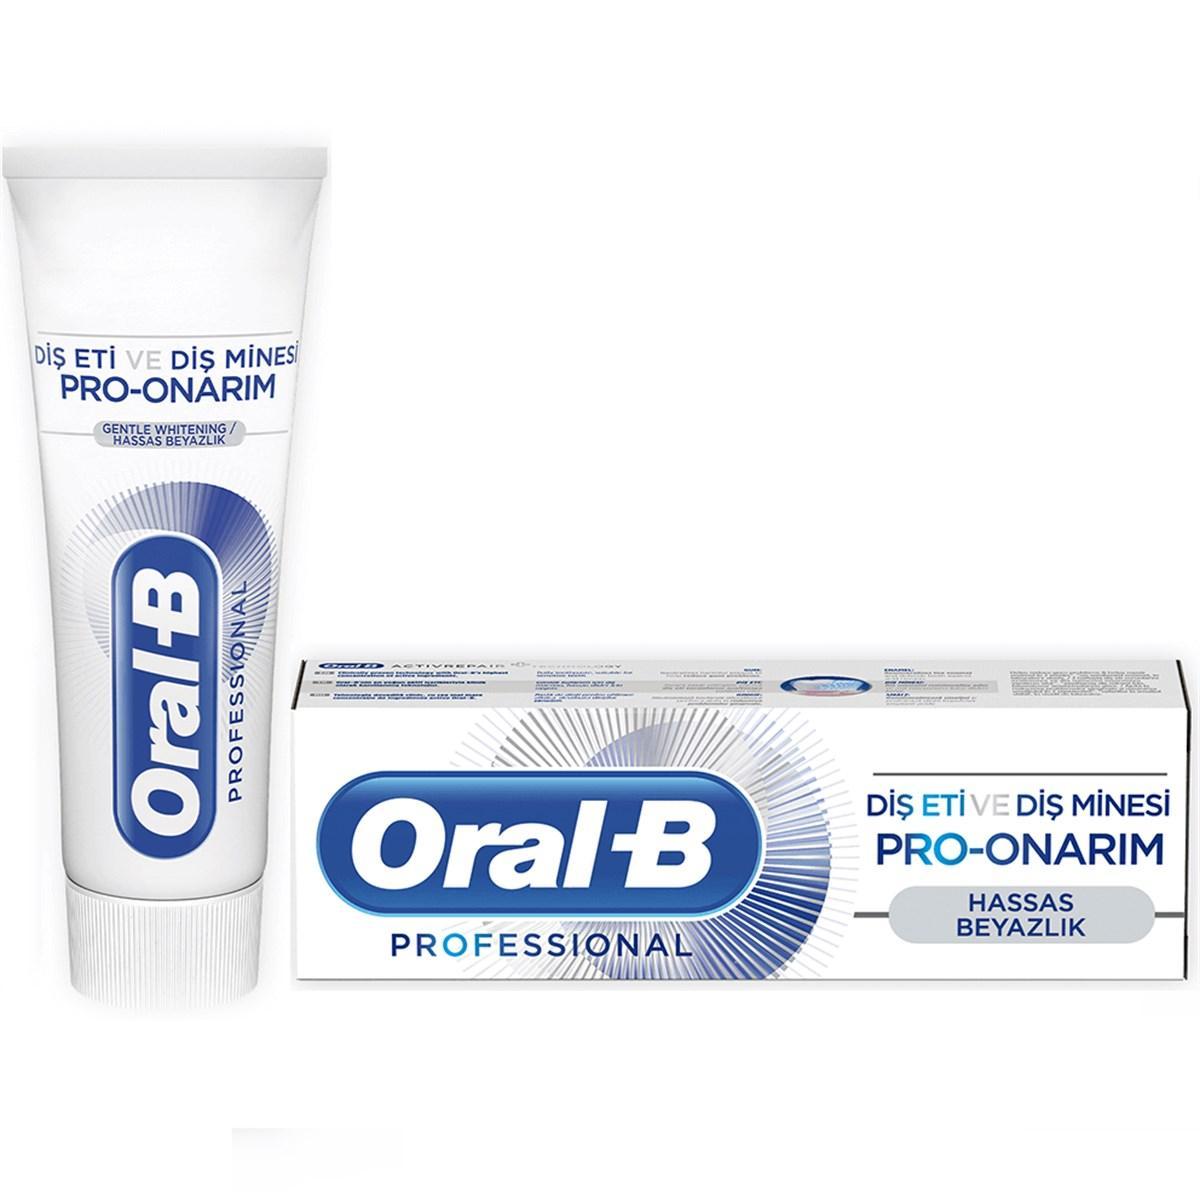 Oral-B Gum&Enamel Pro-Repair GW Паста за зъби